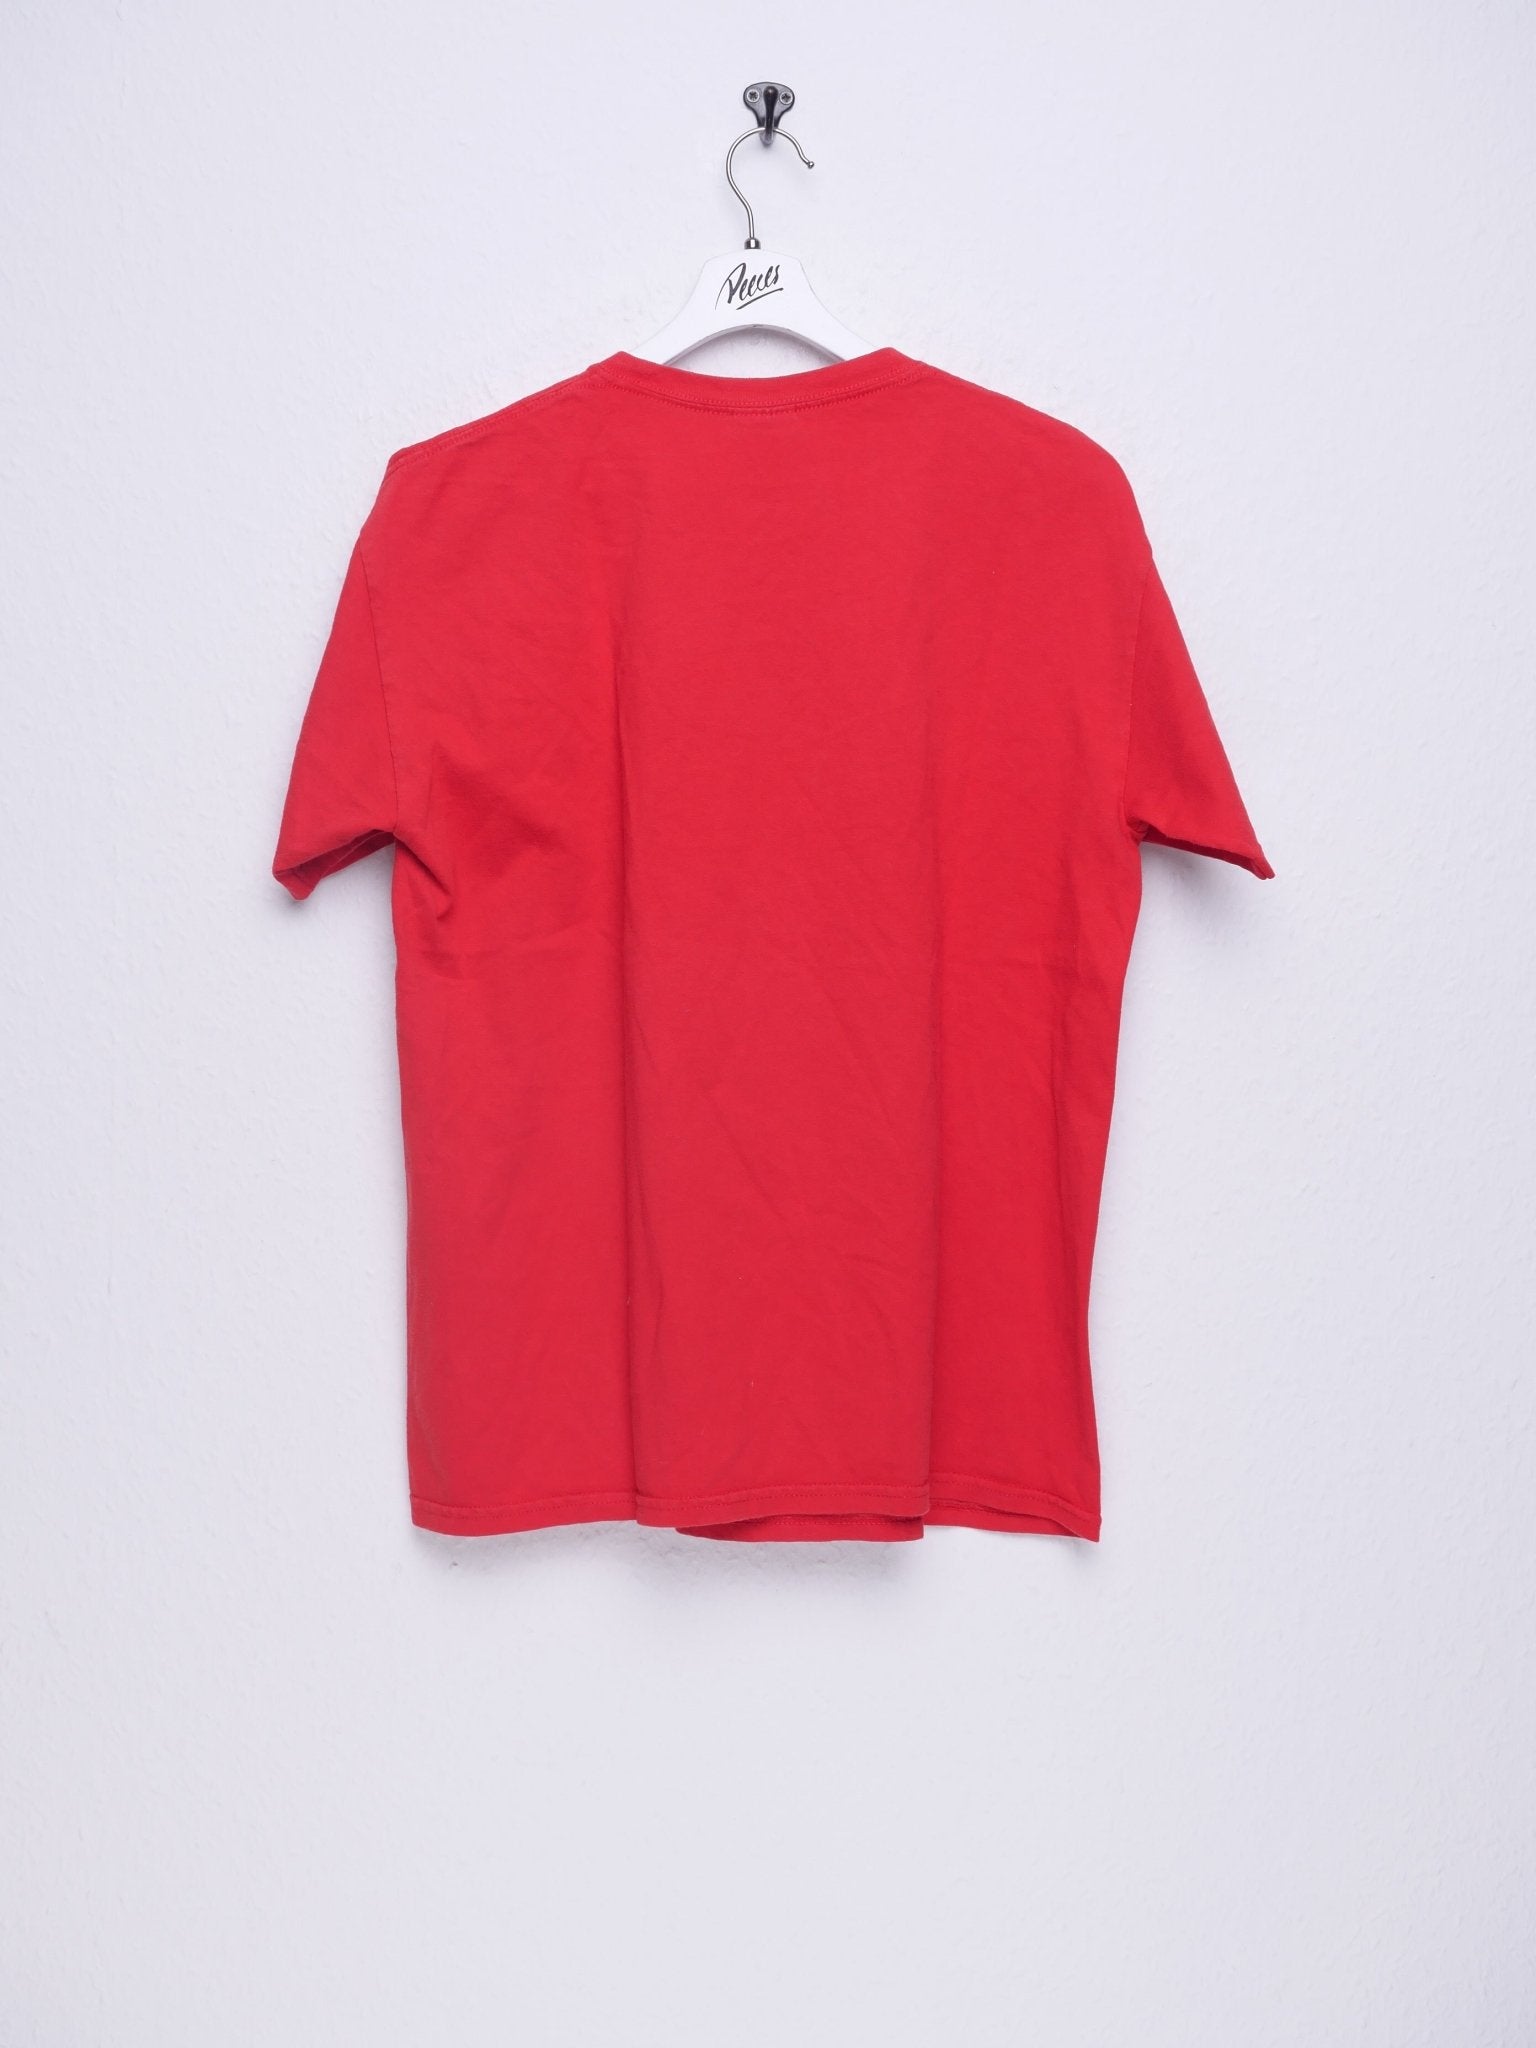 Softball printed Logo red Shirt - Peeces